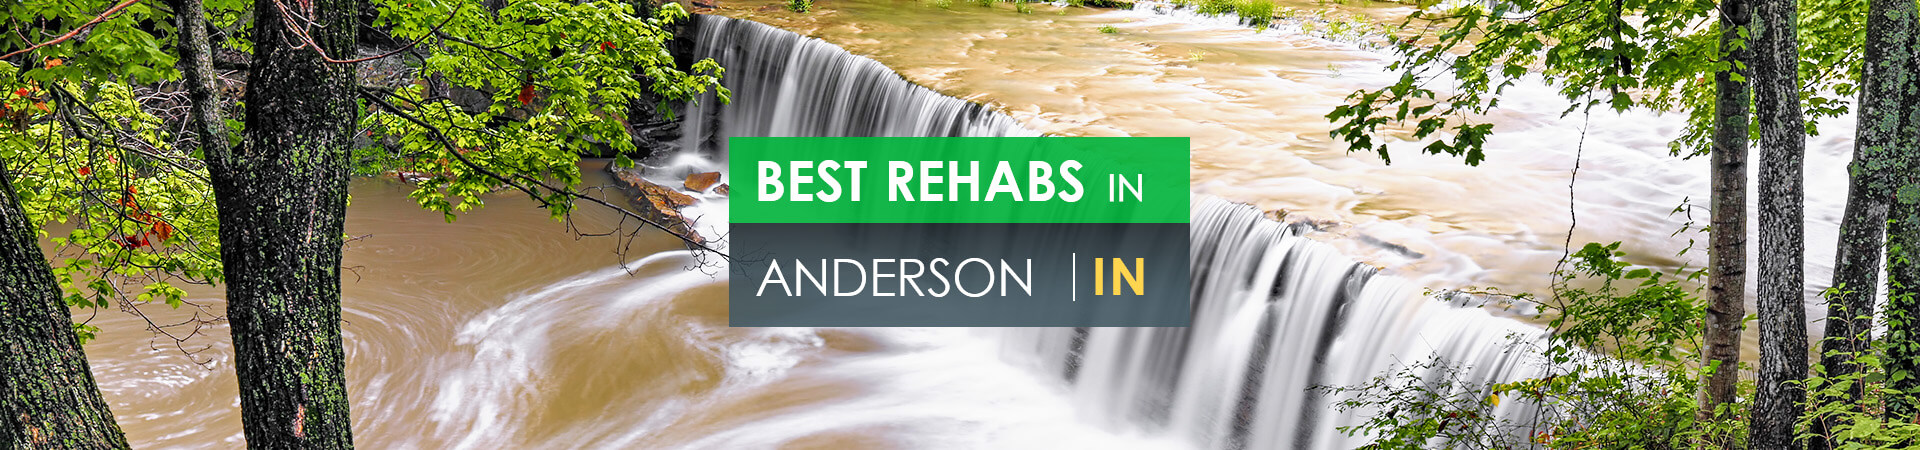 Best rehabs in Anderson, IN